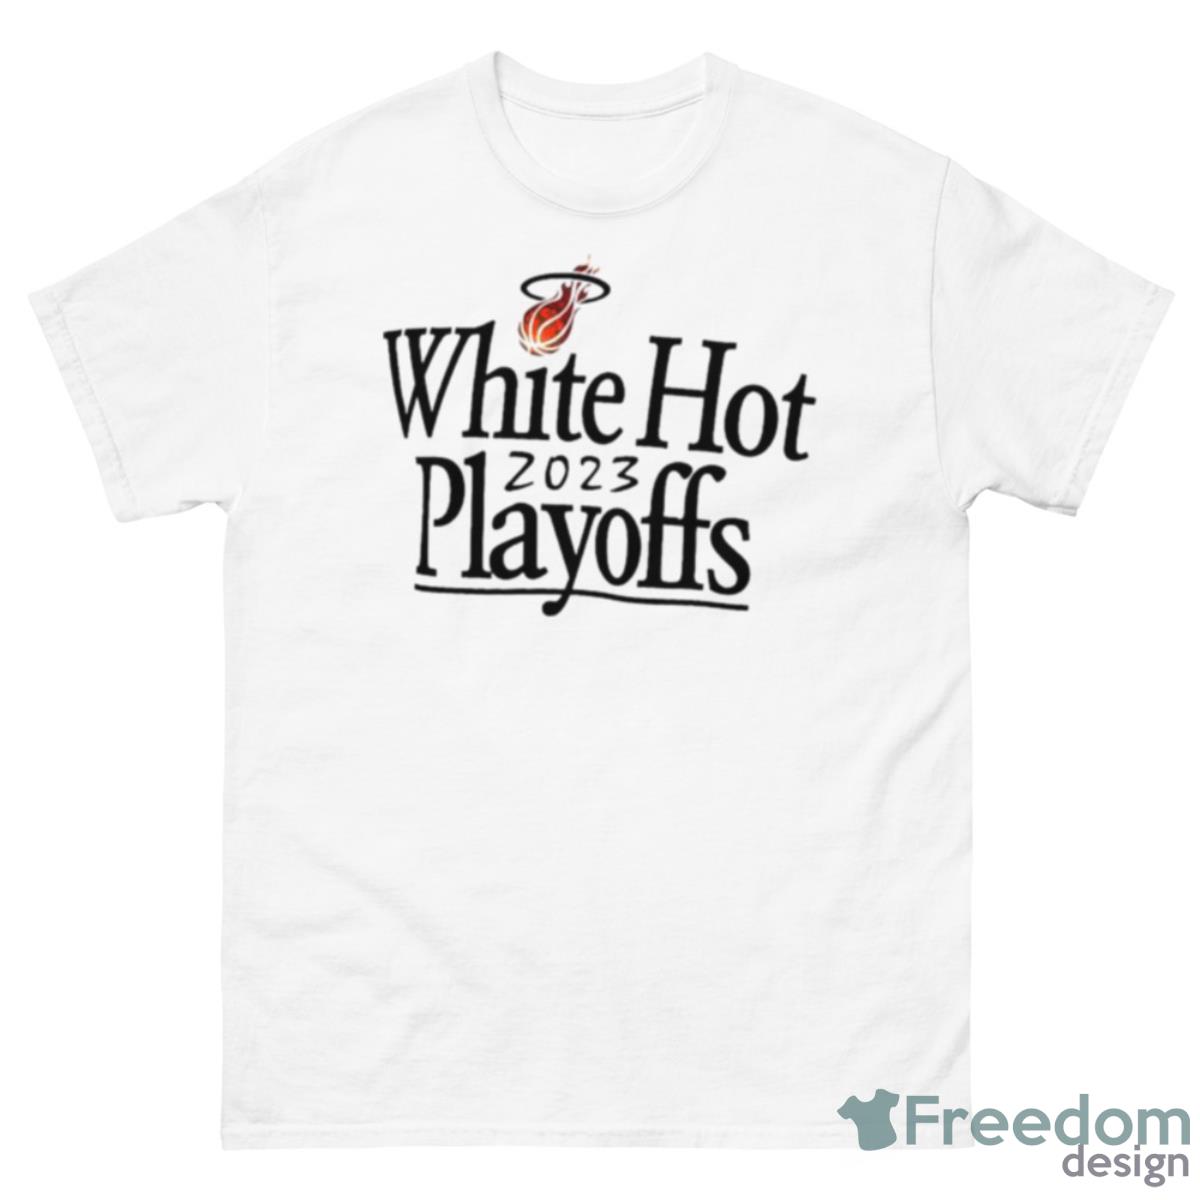 White Hot 2023 Playoffs Miami Heat NBA shirt, hoodie, sweater